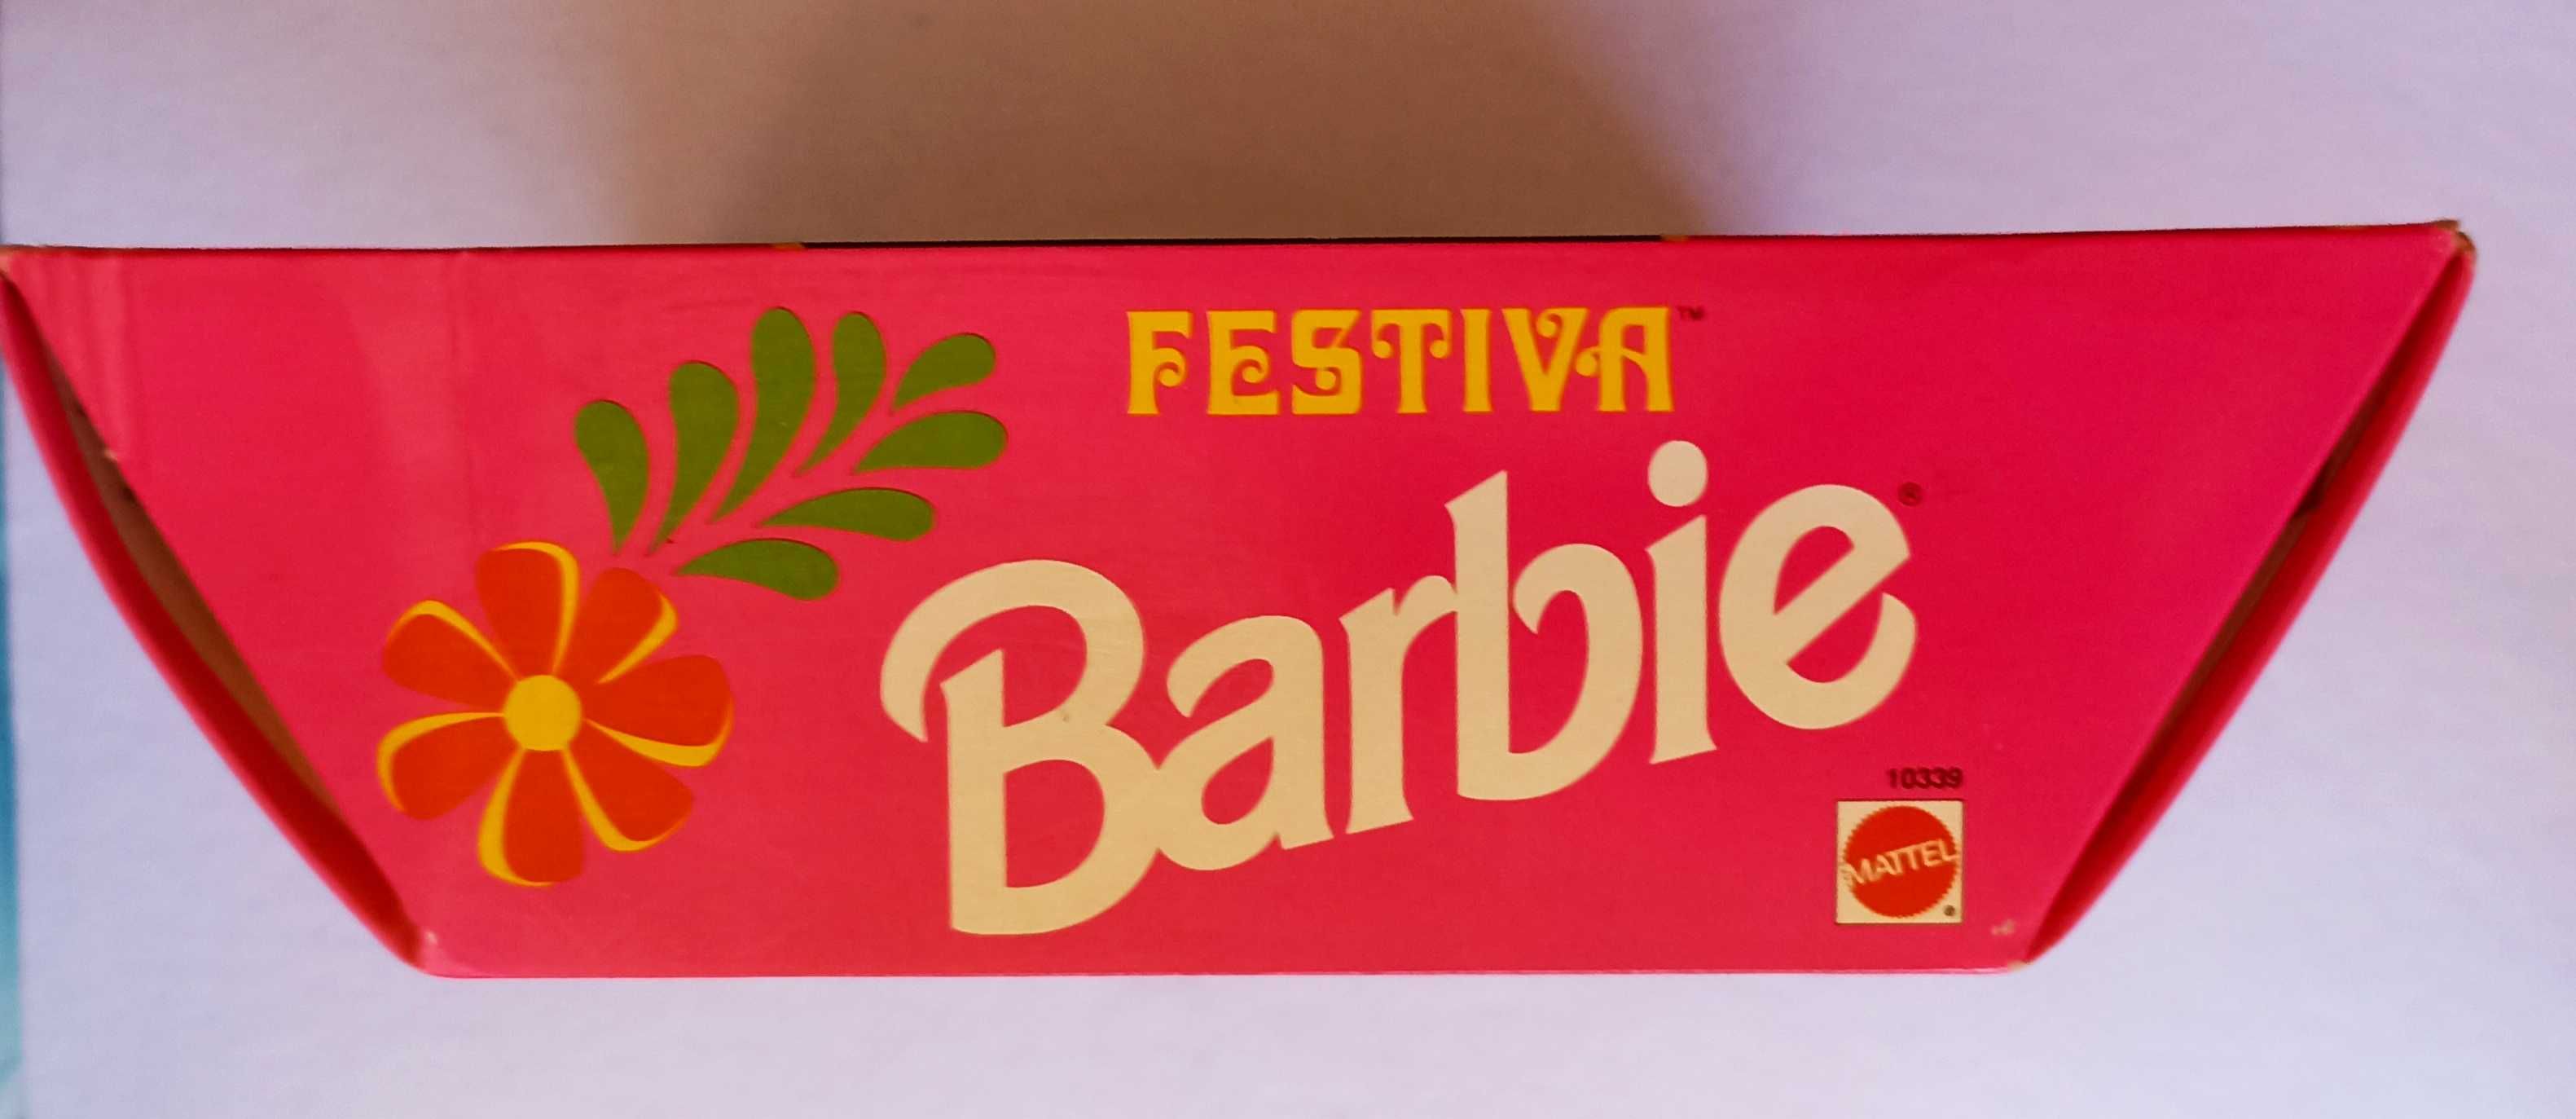 Barbie Festiva 1993 Limited Edition